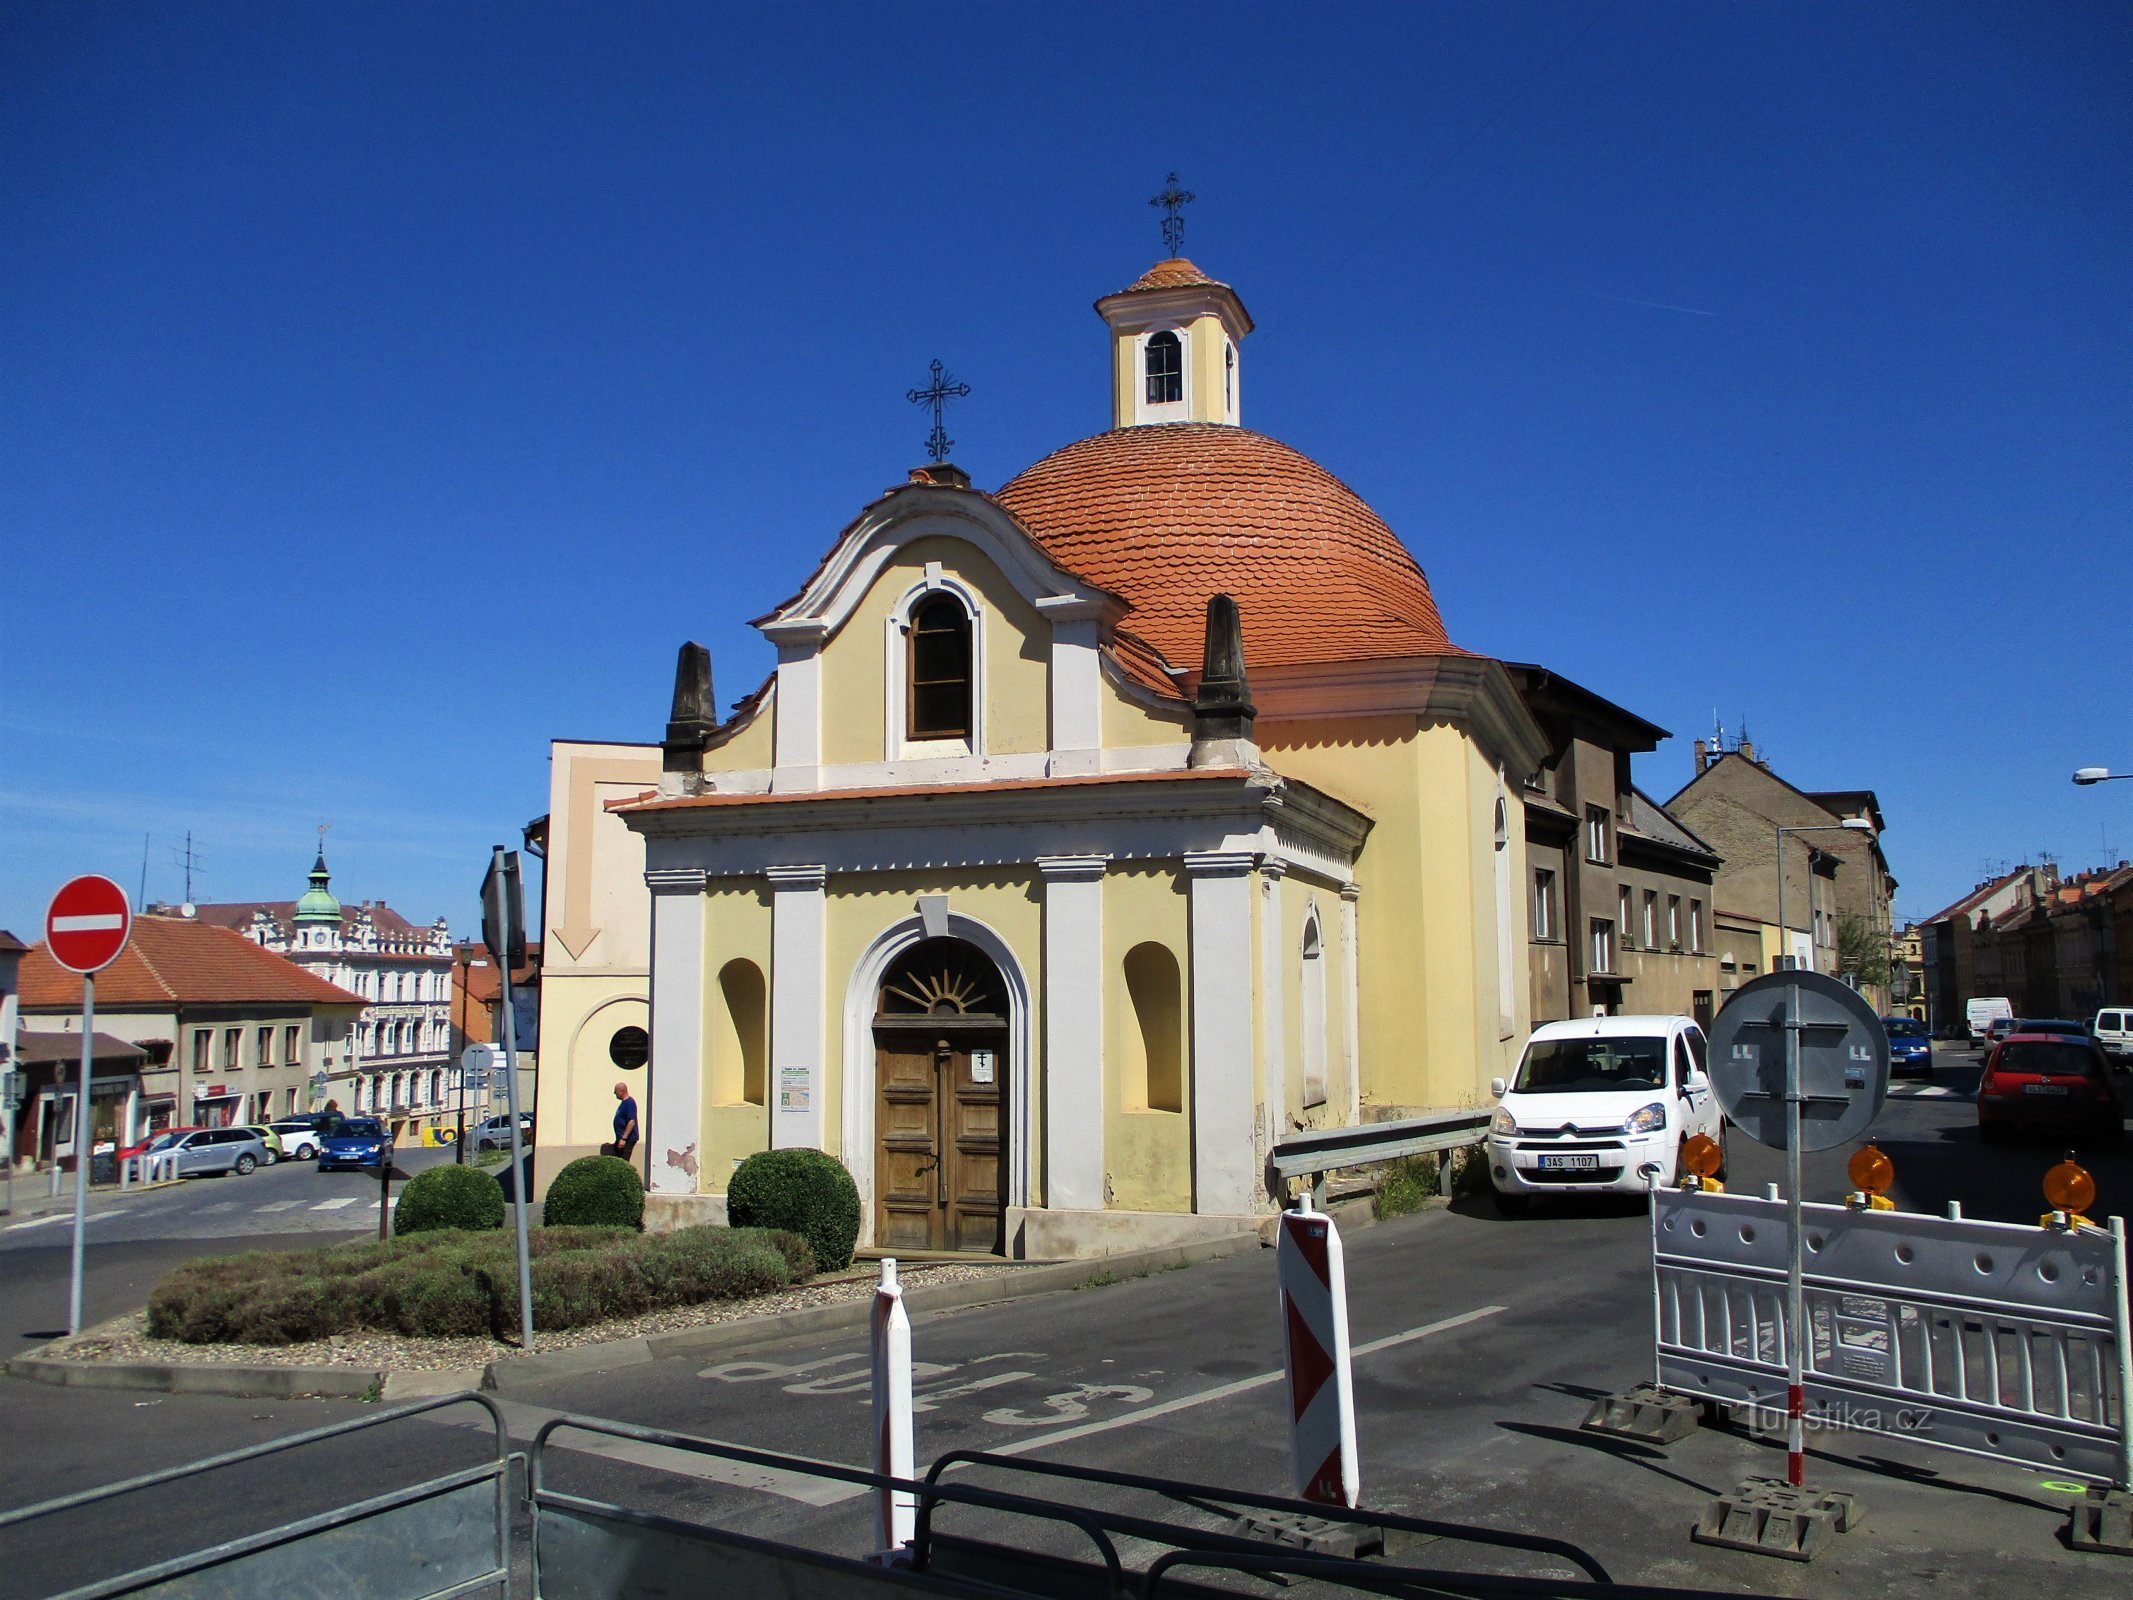 Kaple sv. Josefa (Roudnice nad Labem, 31.7.2020)